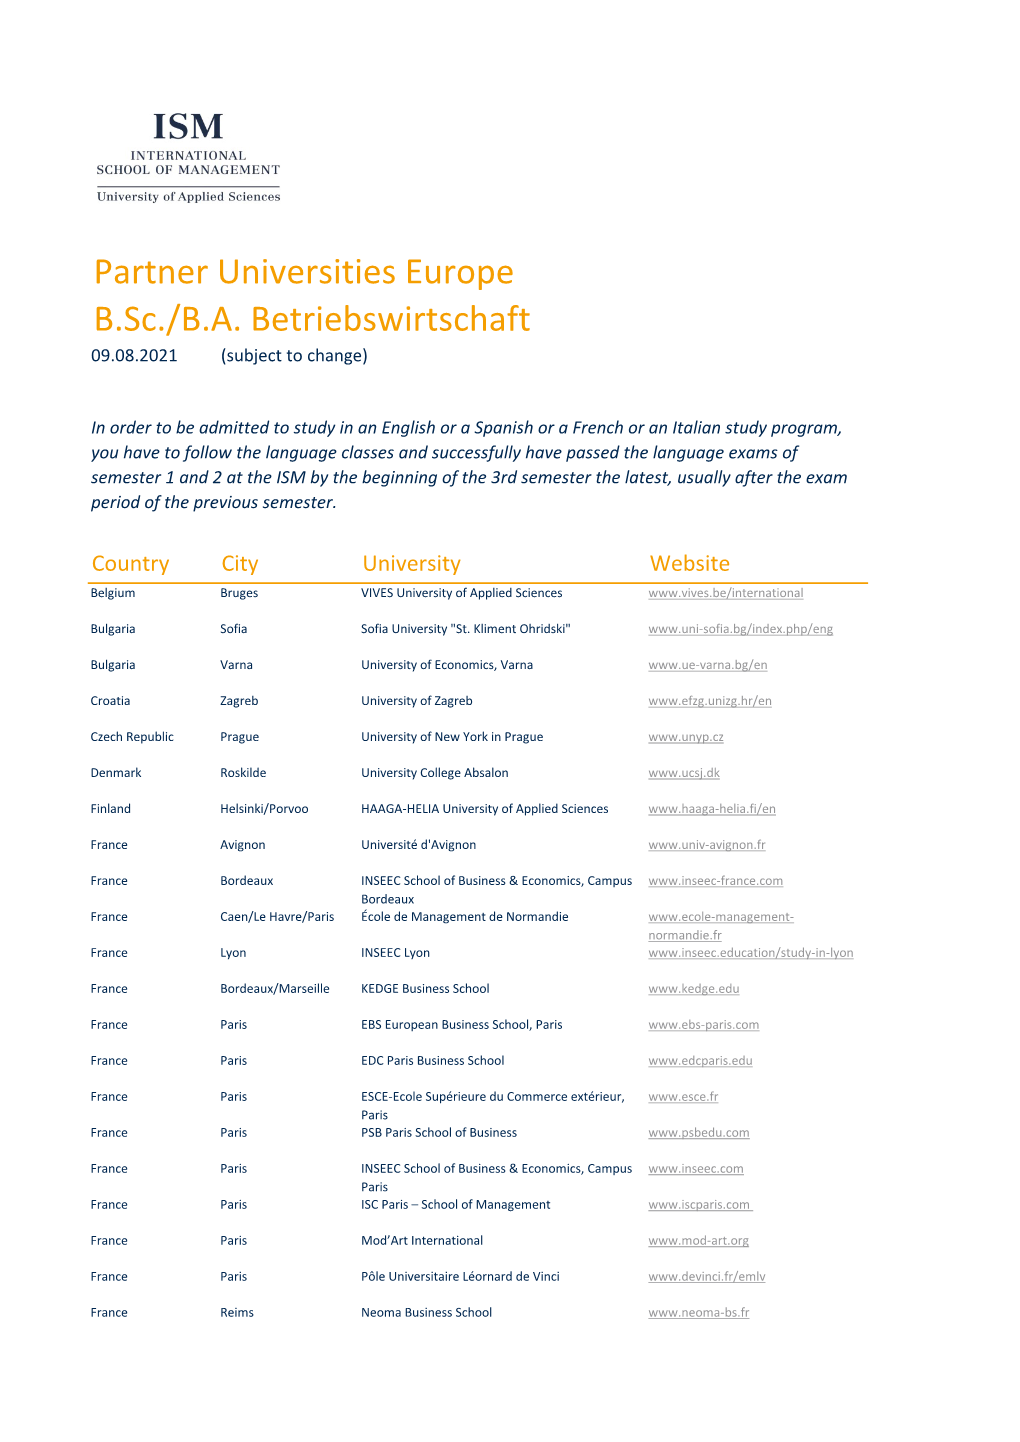 Partner Universities Europe B.Sc./B.A. Betriebswirtschaft 09.08.2021 (Subject to Change)